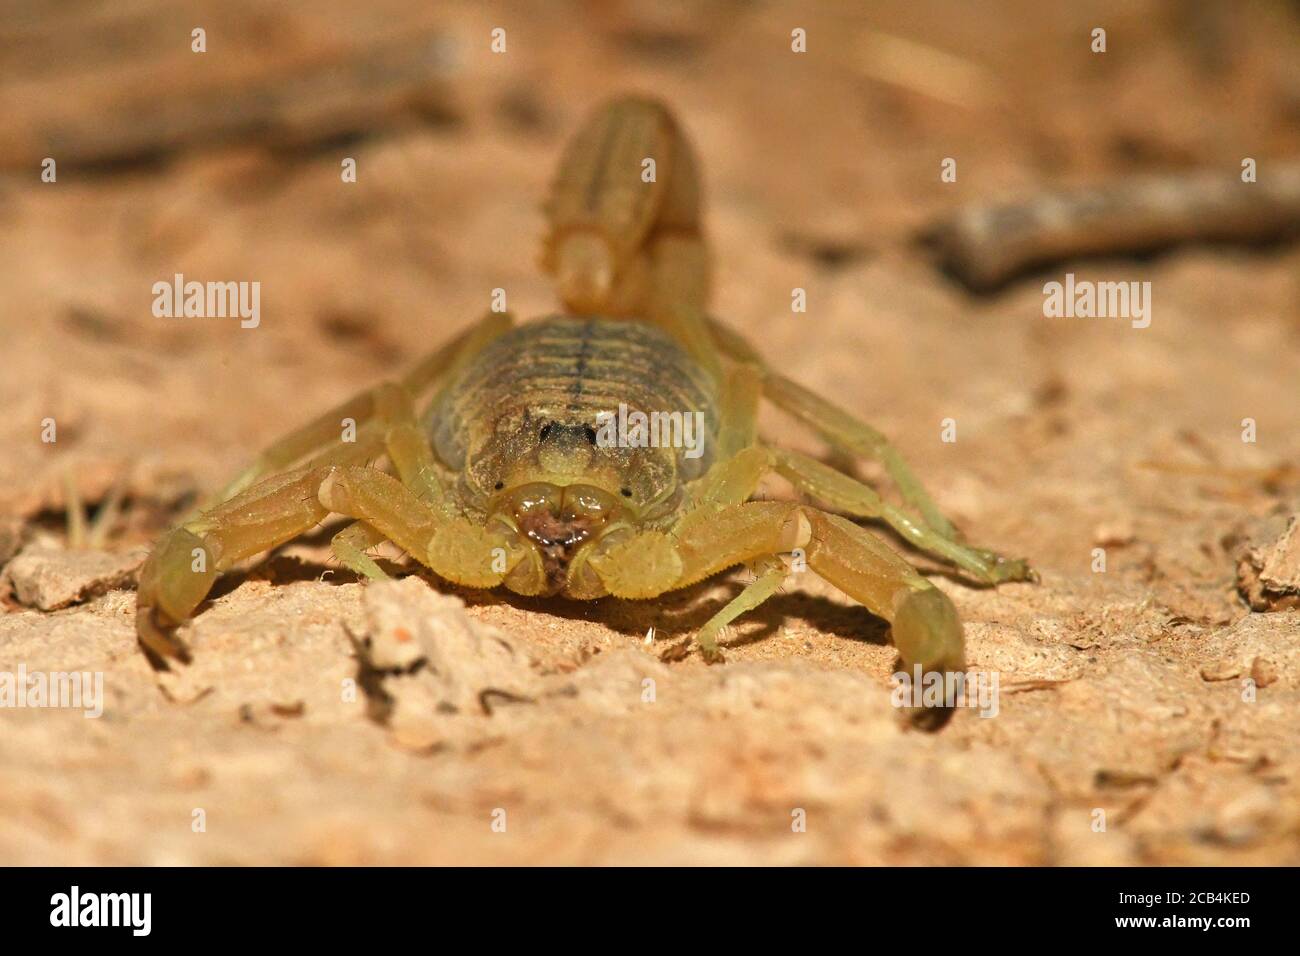 Scorpion in the desert, closeup Stock Photo